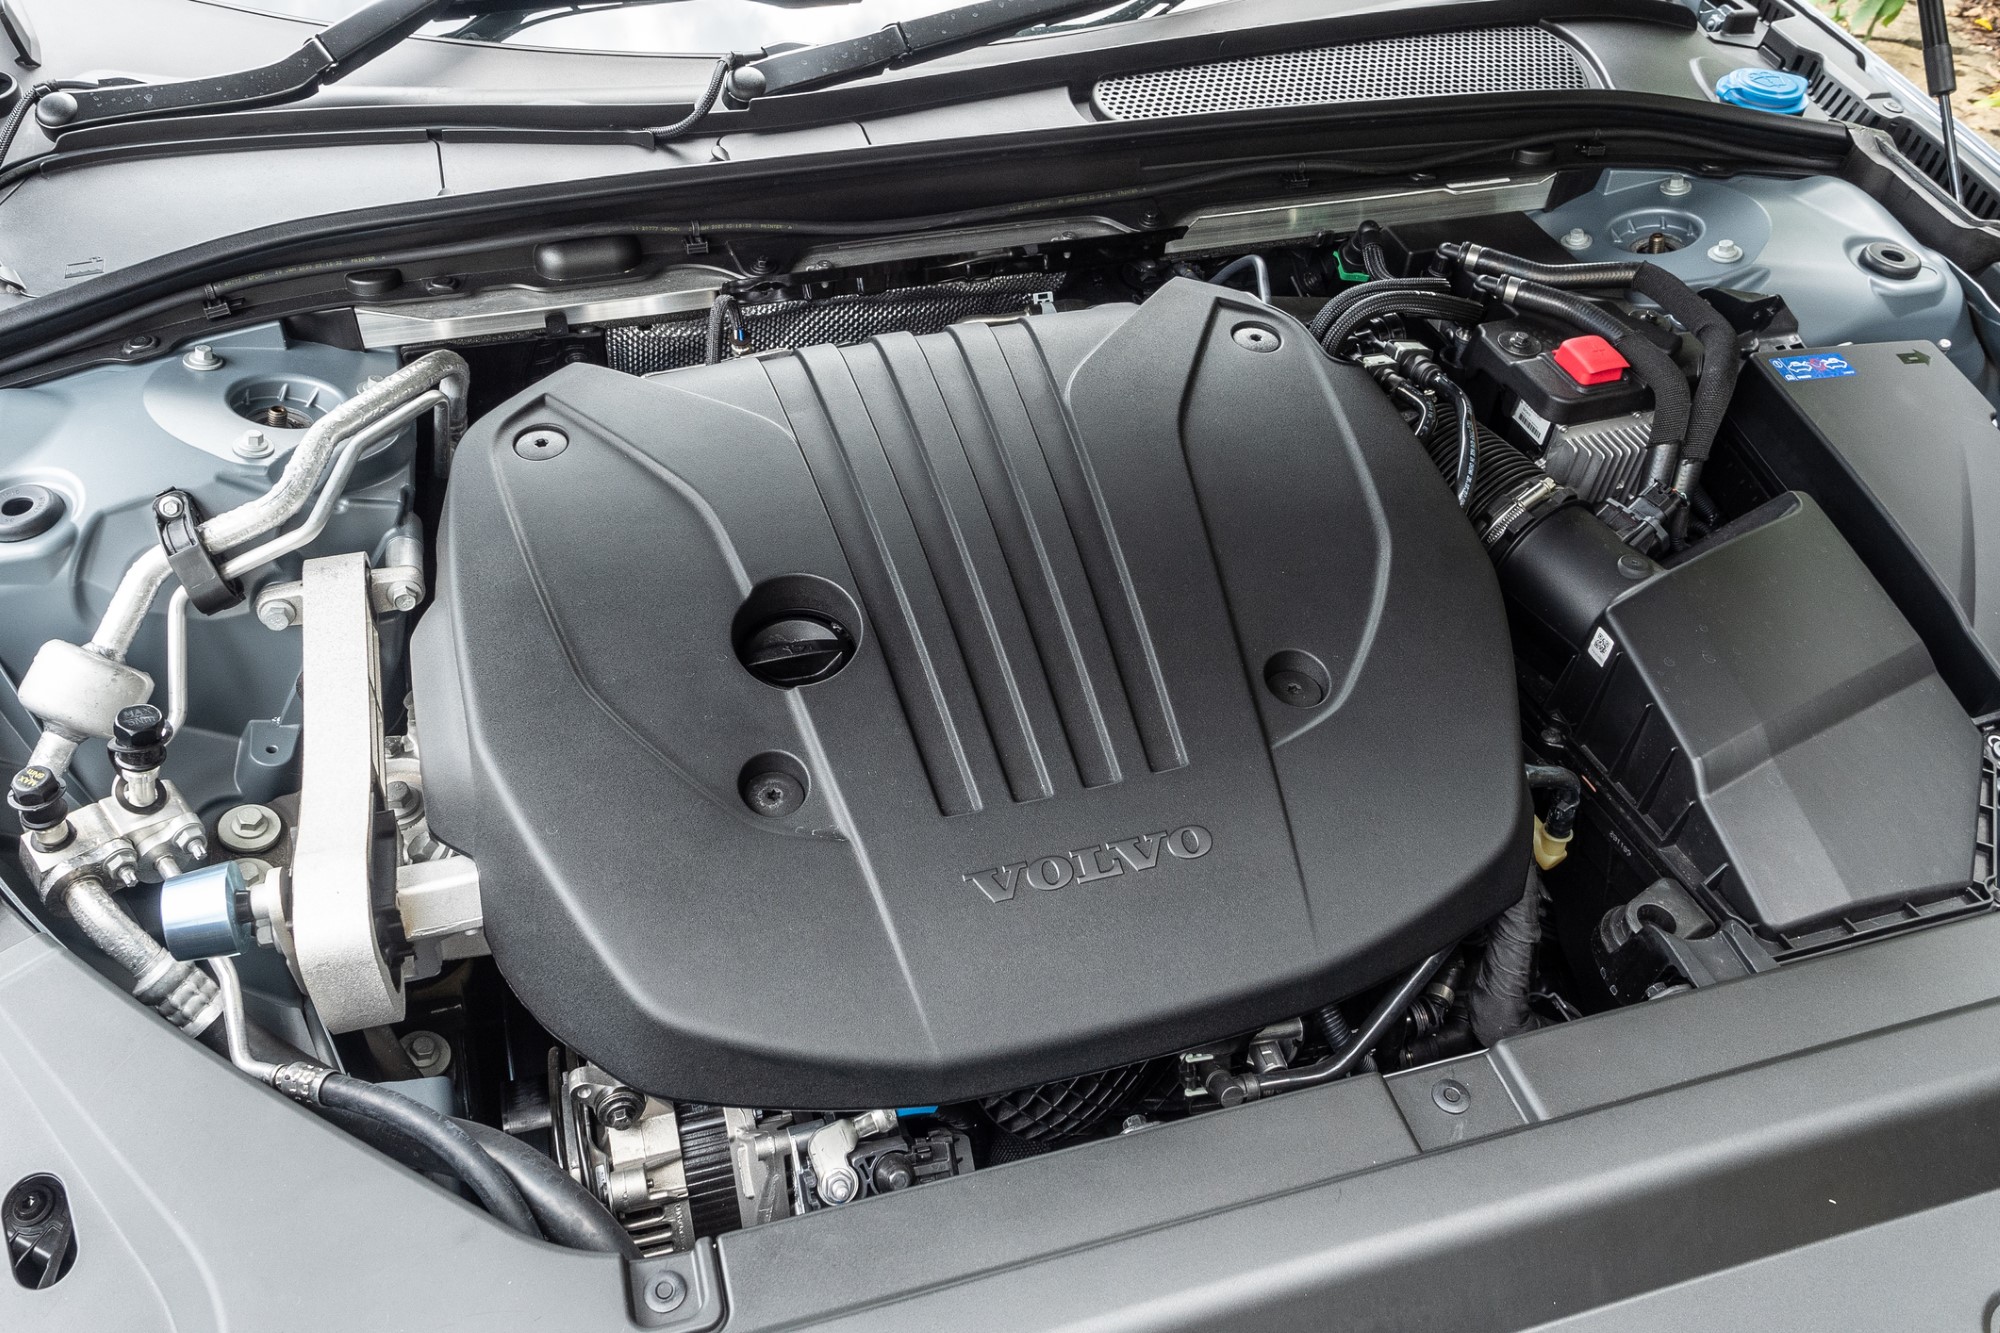 Volvo XC60 engine